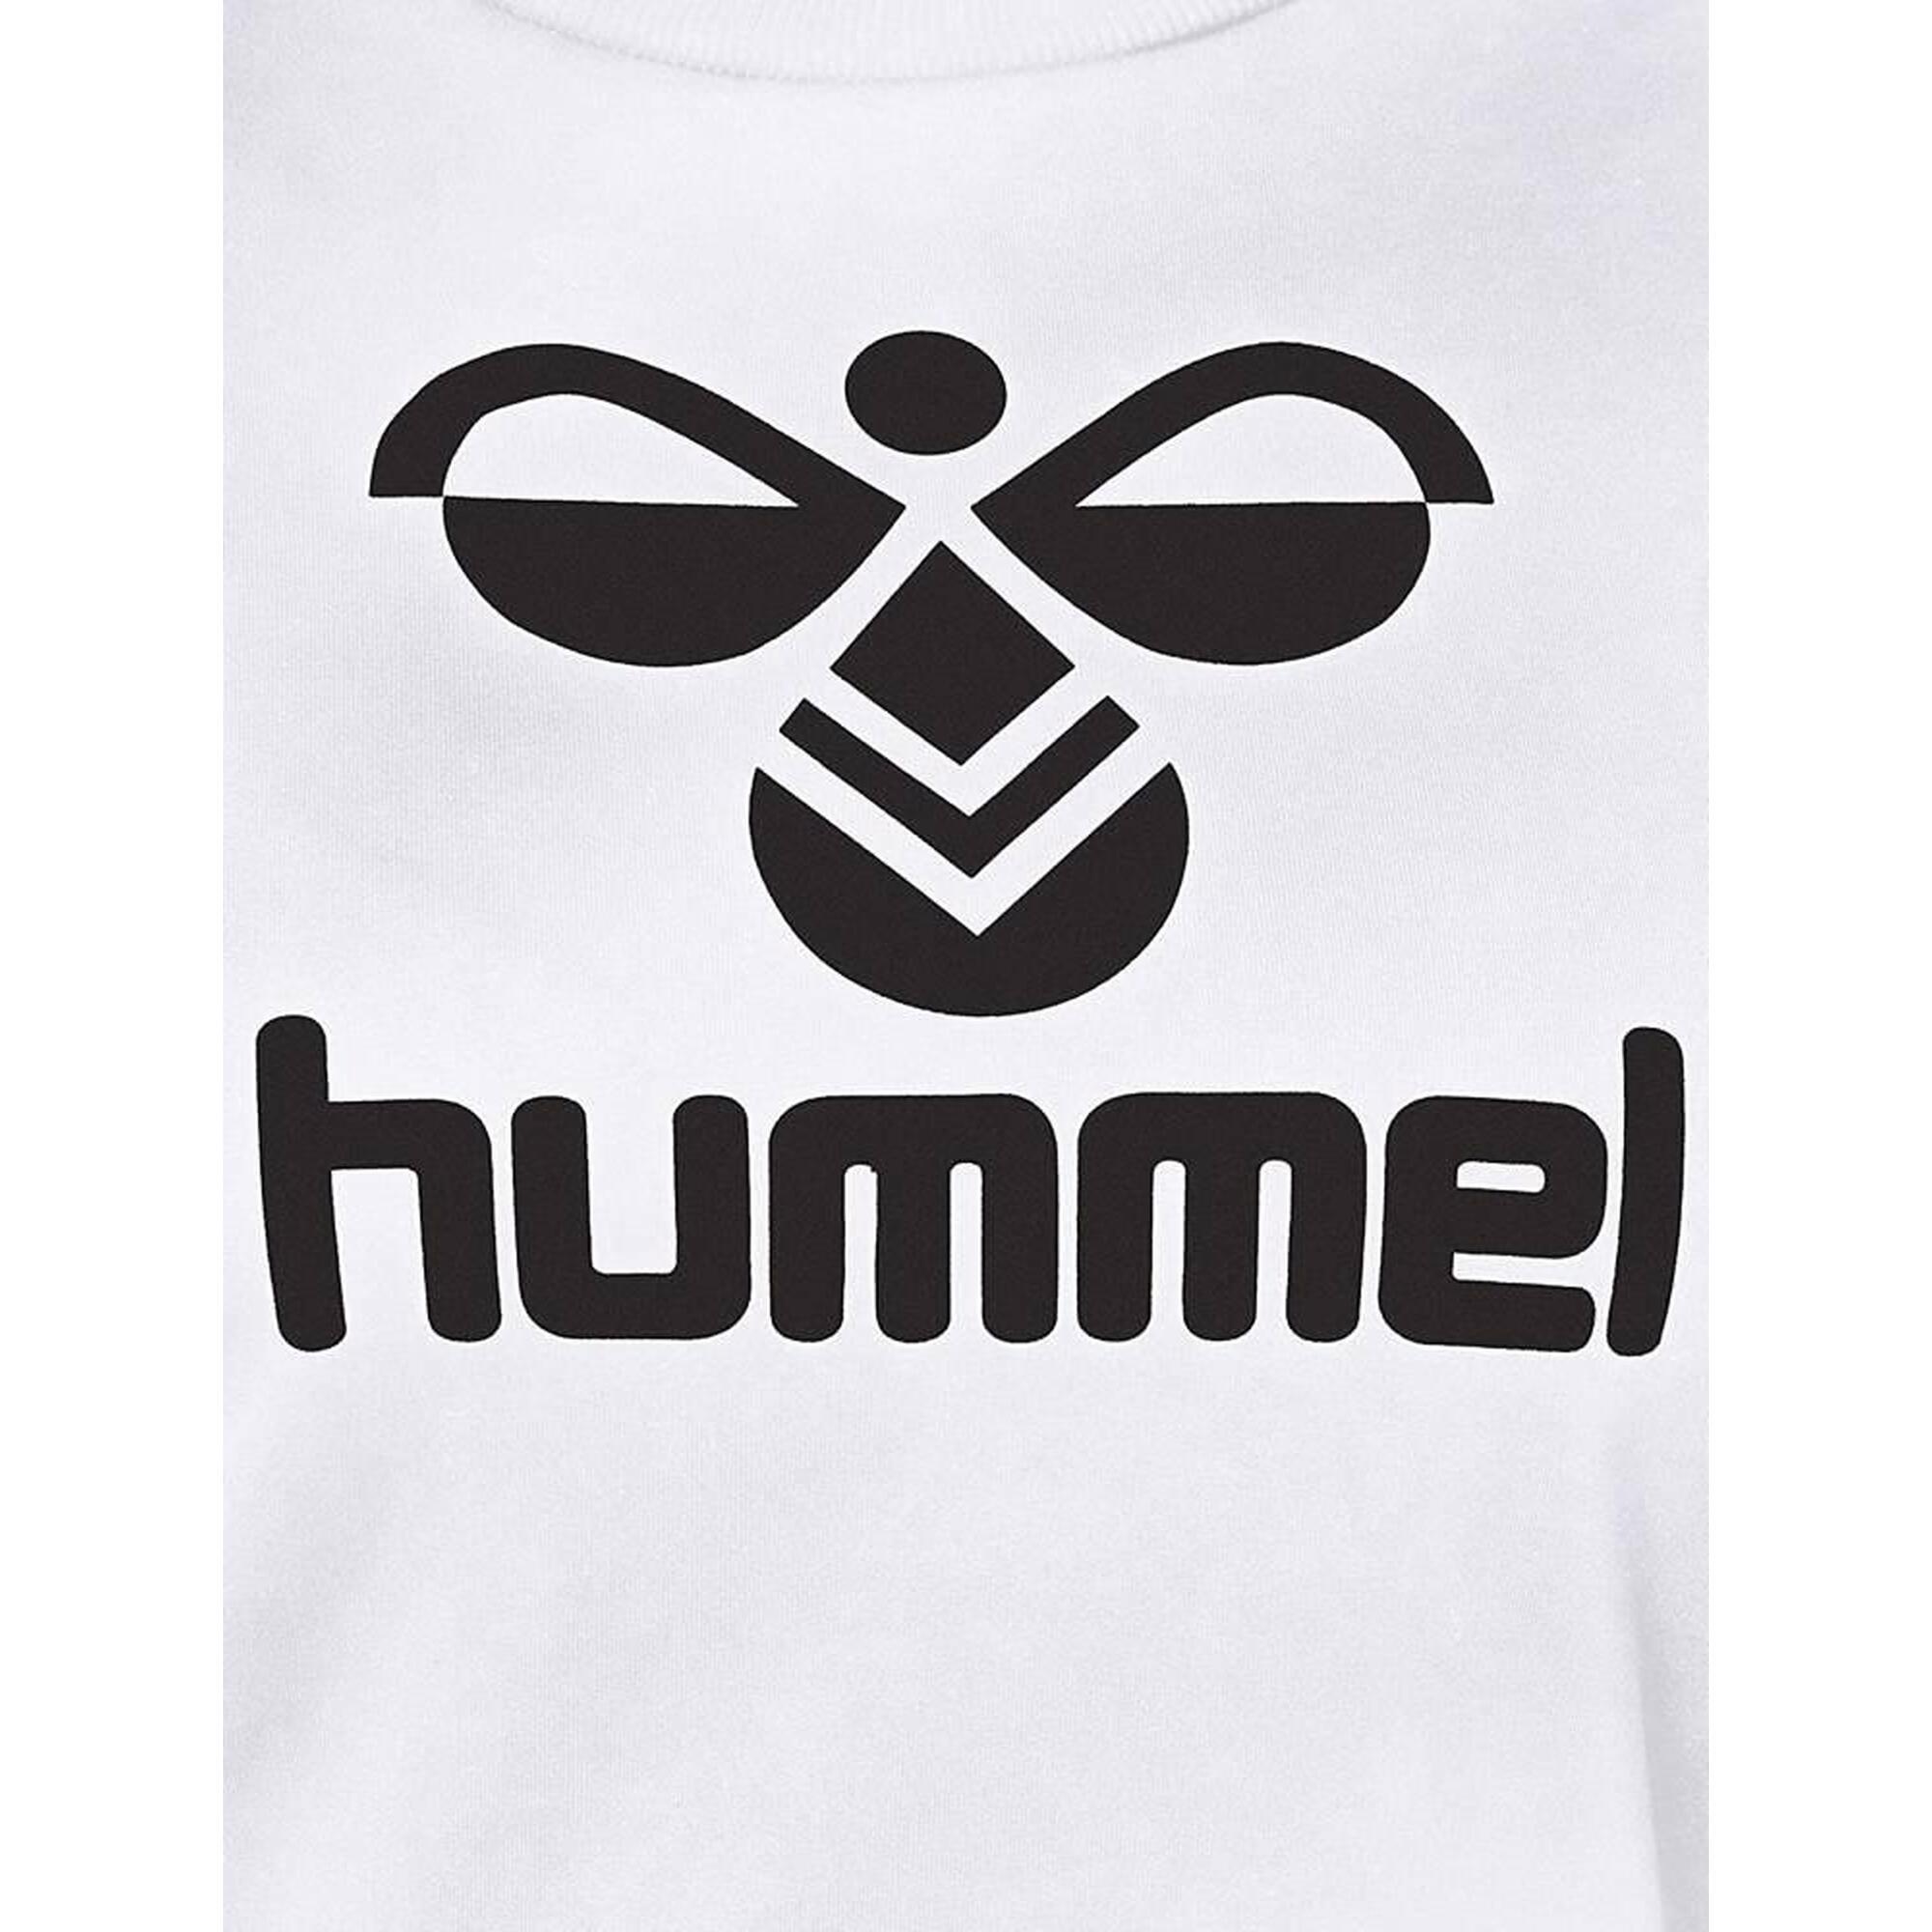 Sweat-shirt de sport Hummel Classic Taped pour femmes